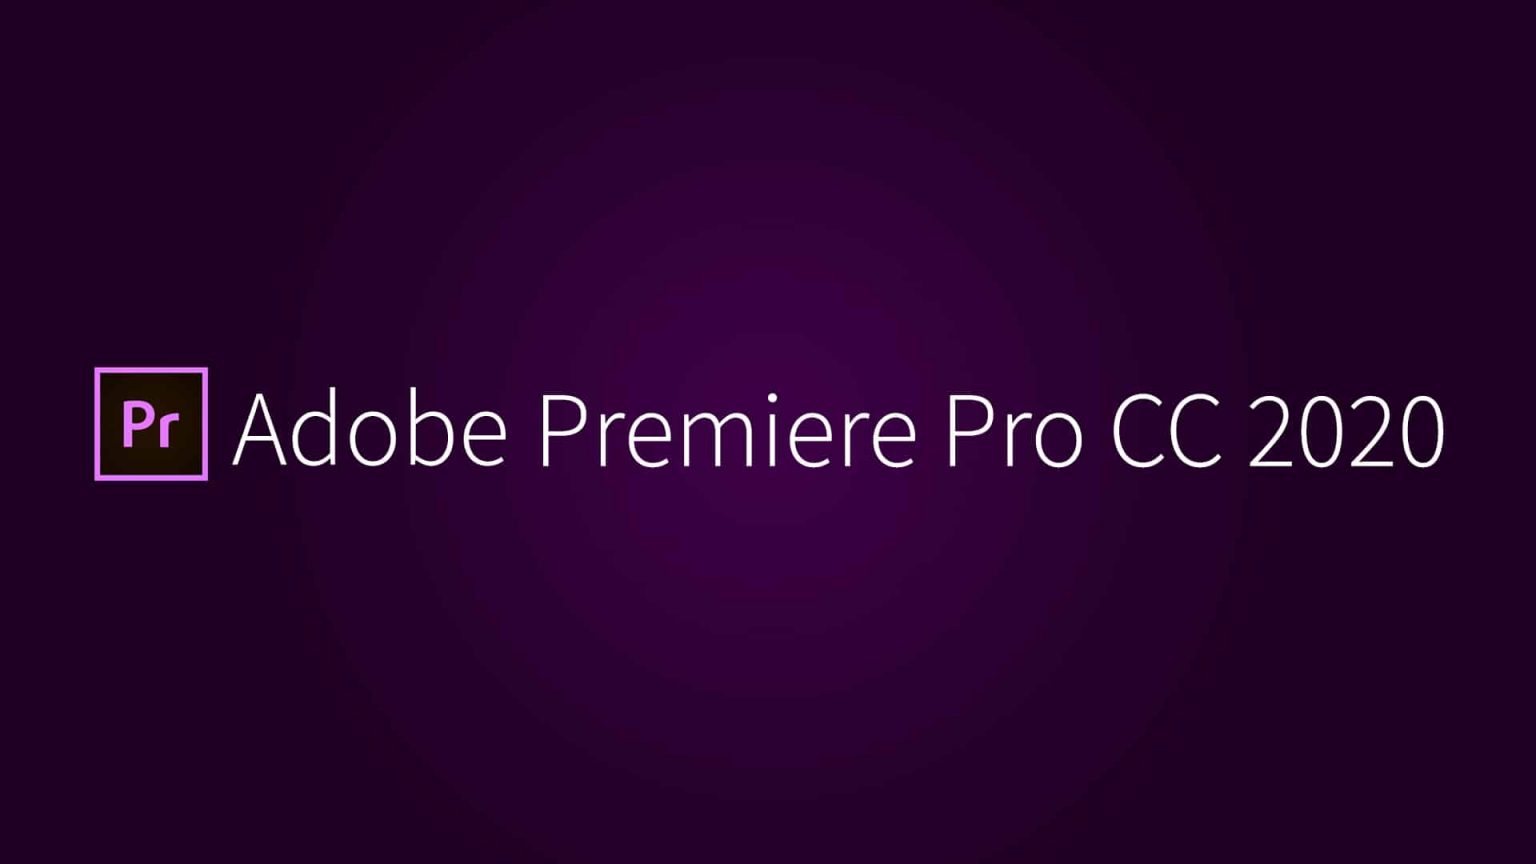 adobe premiere pro 2020 download free full version windows 10